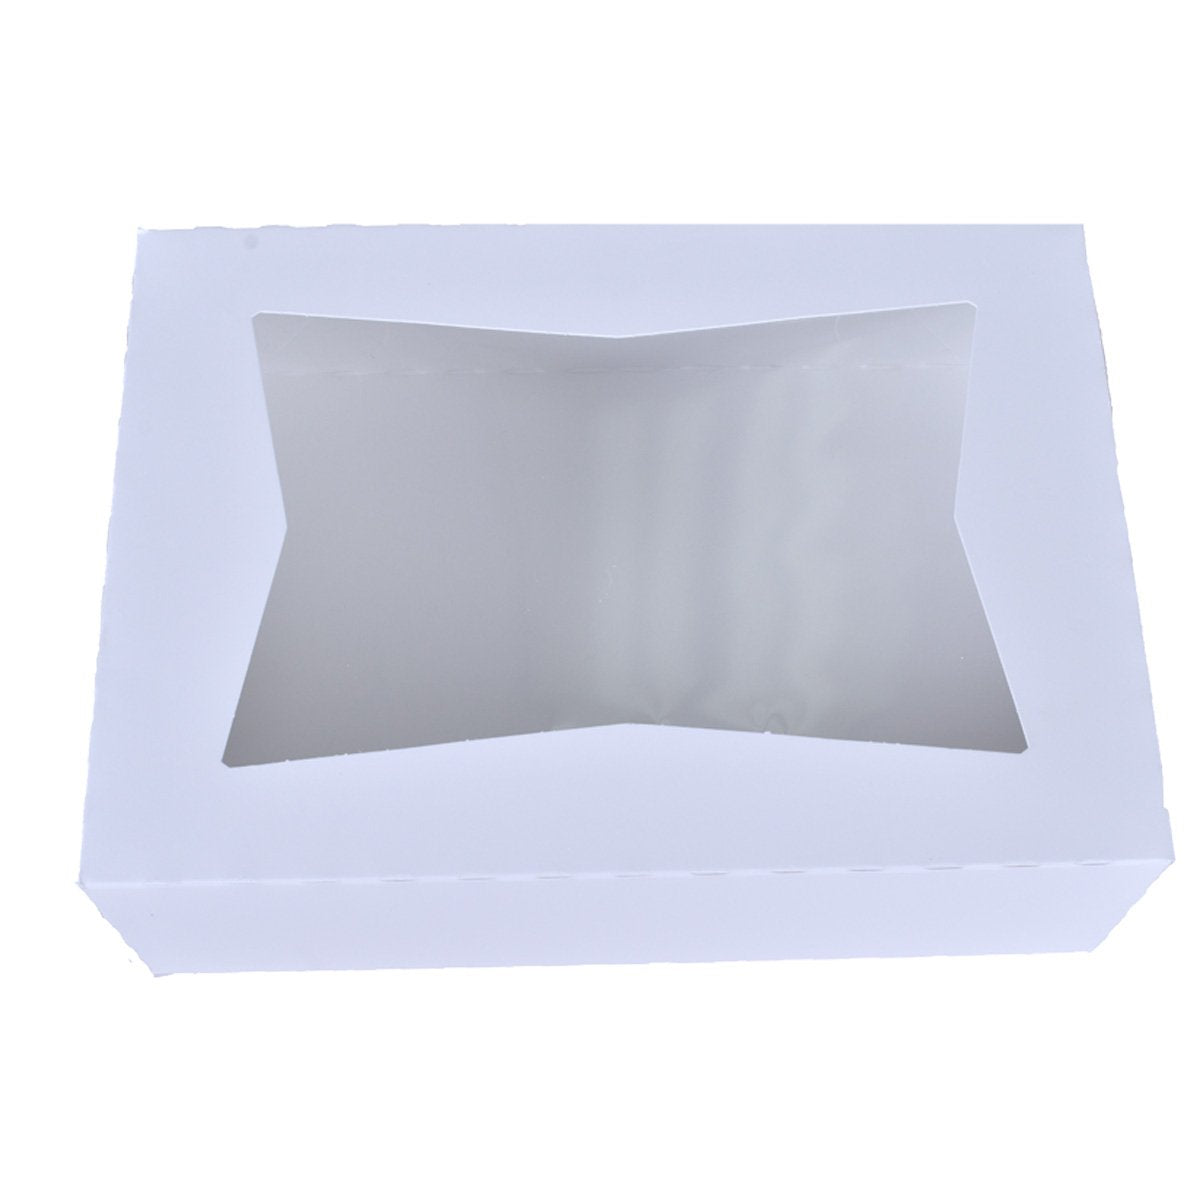 White Window Cake Boxes - 14x10x6 Bake Supply Plus Box - Bake Supply Plus